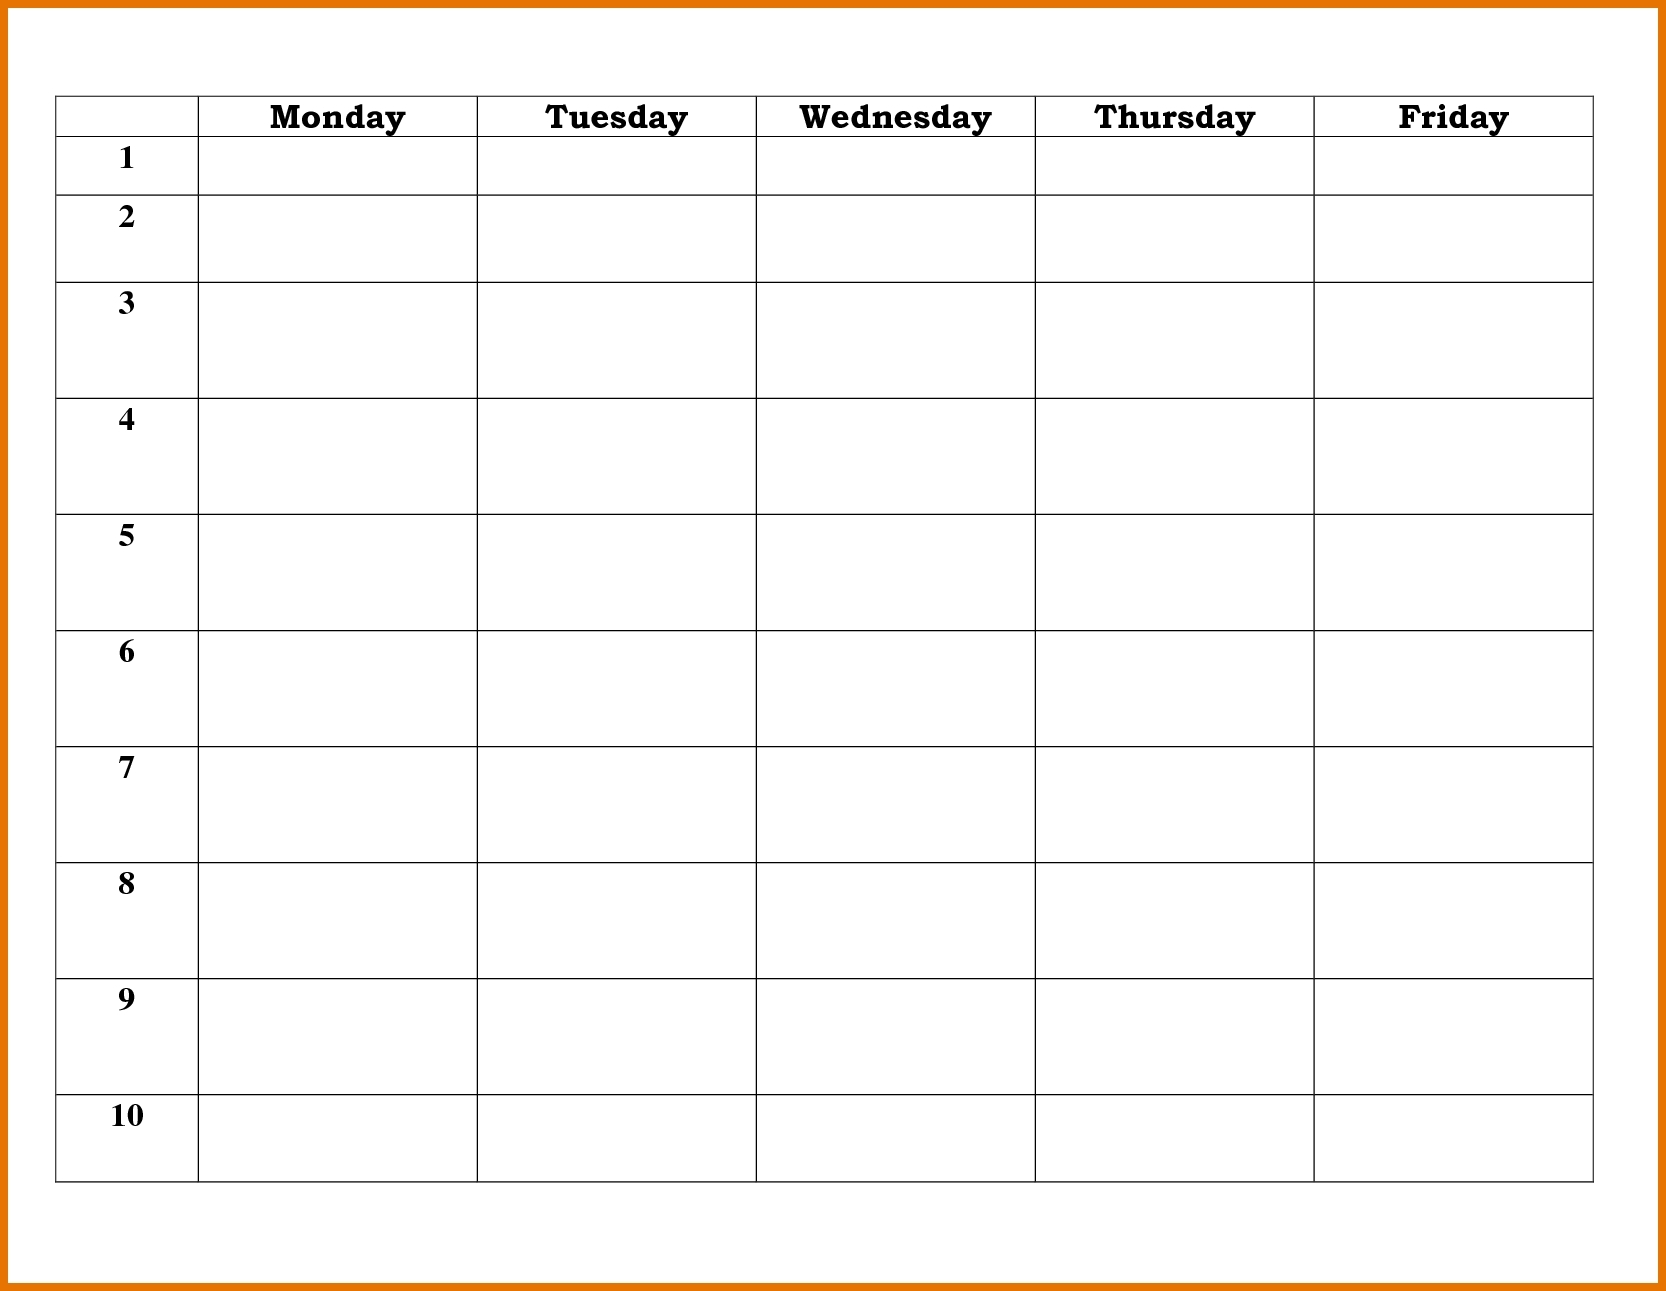 Blank 5 Day School Timetable | Calendar Printing Example in 5 Day Calendar Microsoft Word